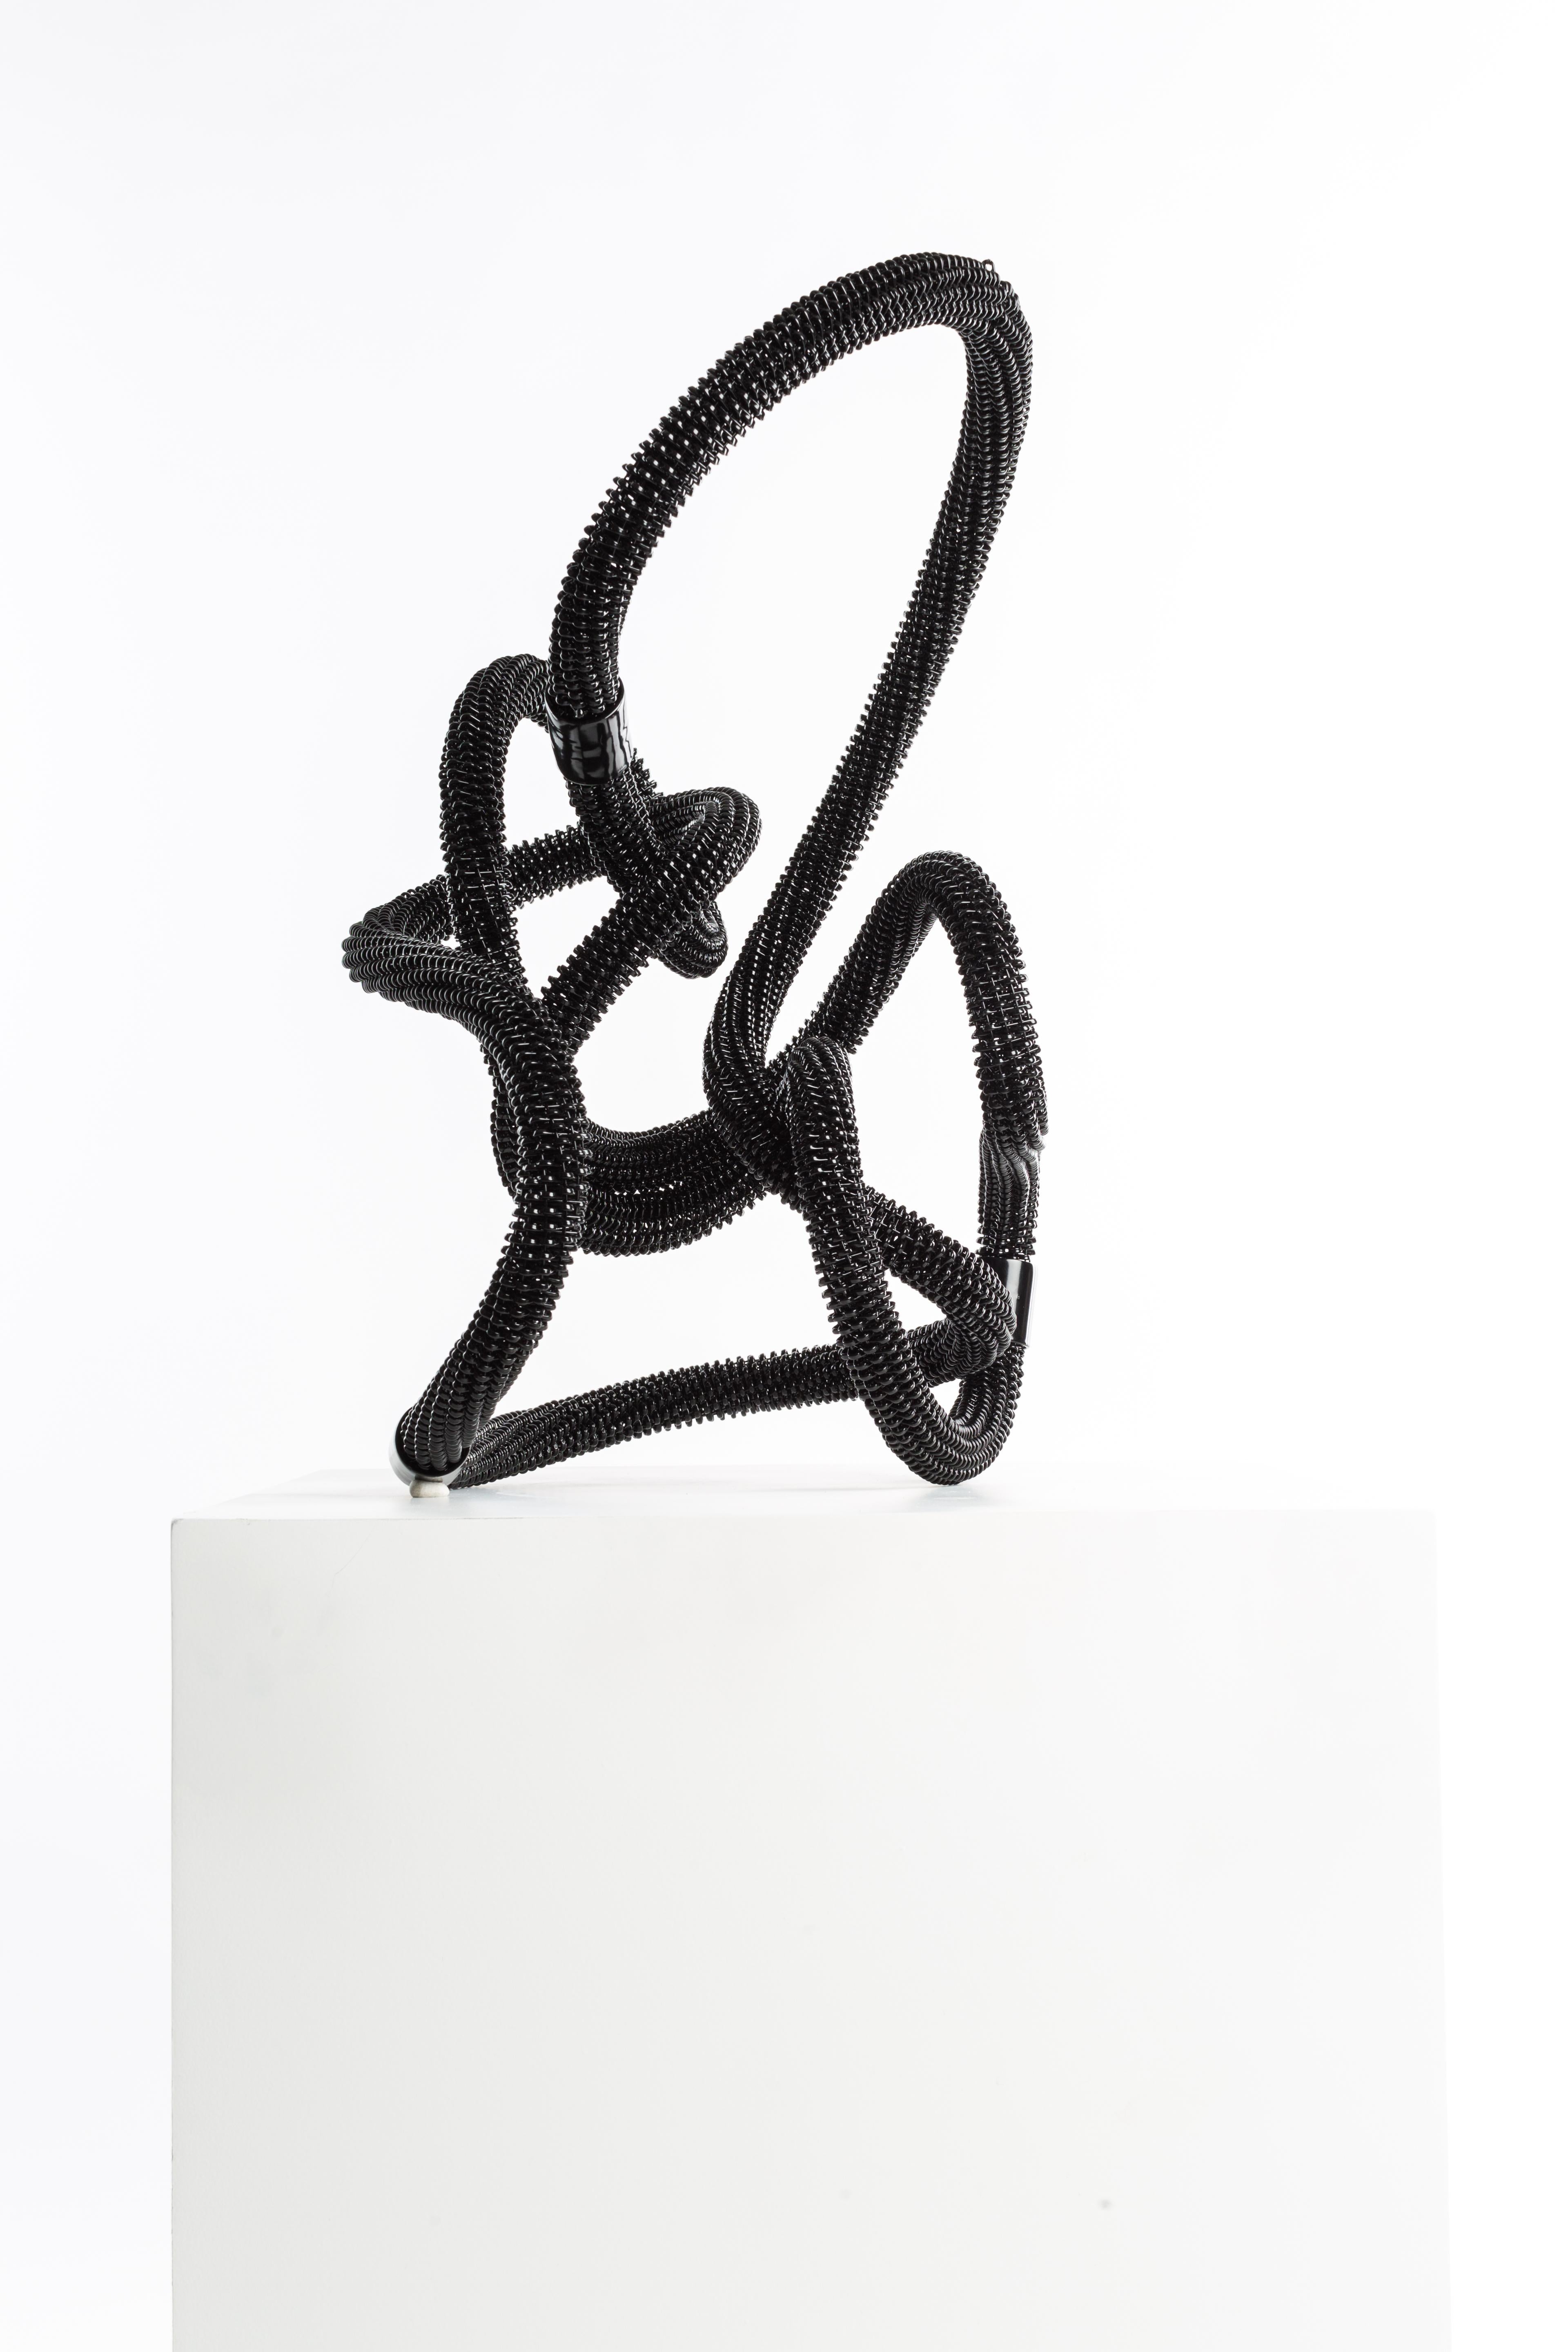 Driaan Claassen Abstract Sculpture - Black, Powder Coating, Wire, Steel, Abstract, Contemporary, Modern, Sculpture